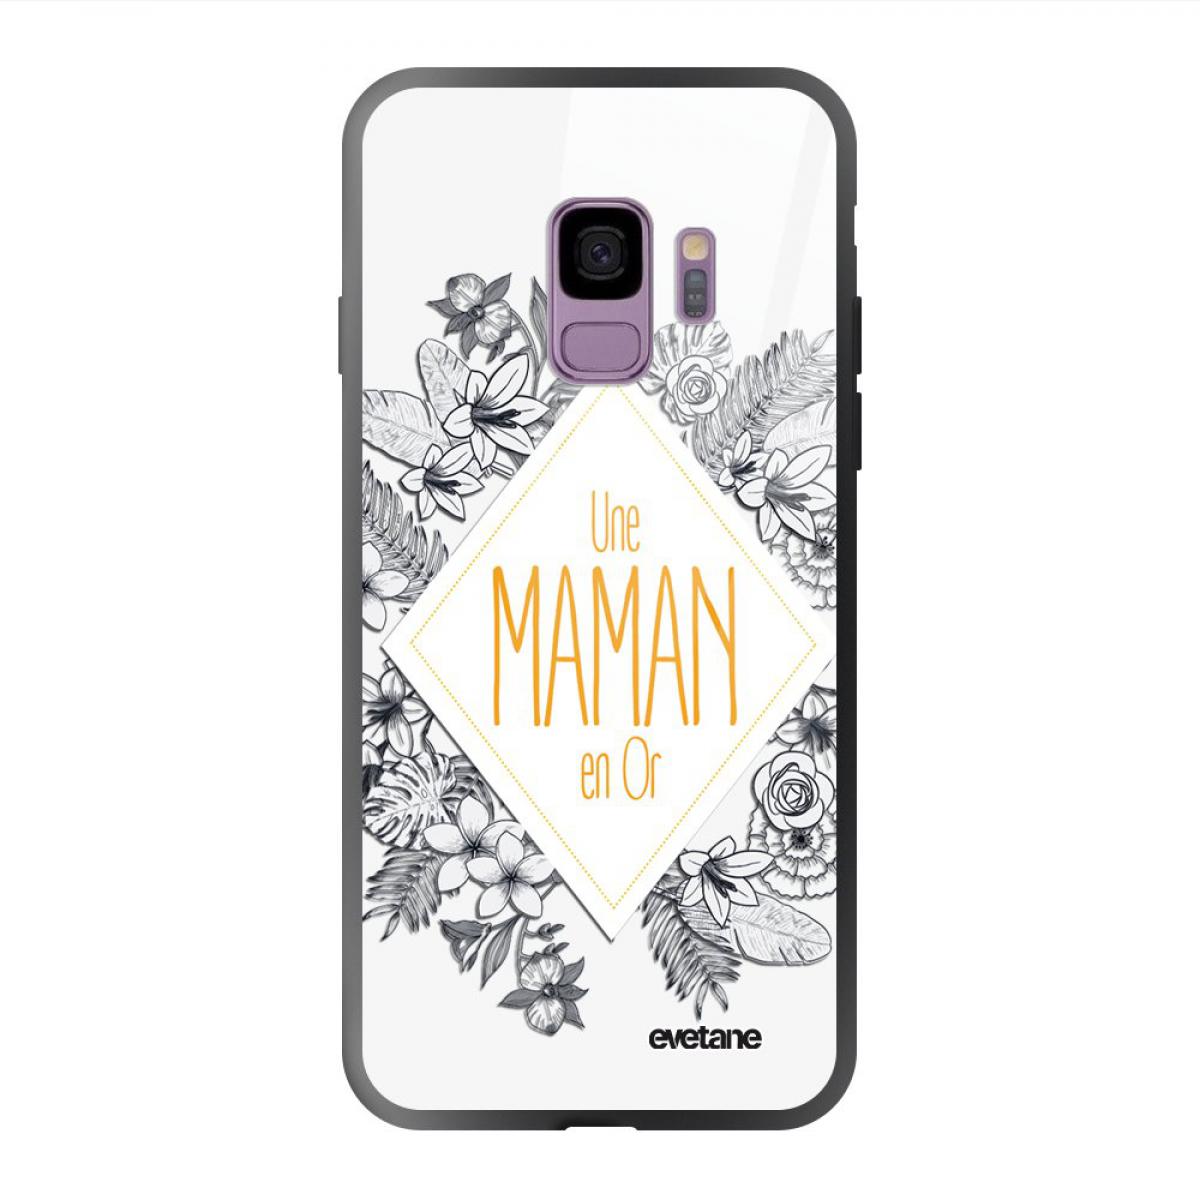 Evetane - Coque Galaxy S9 soft touch noir effet glossy Une Maman en or Design Evetane - Coque, étui smartphone